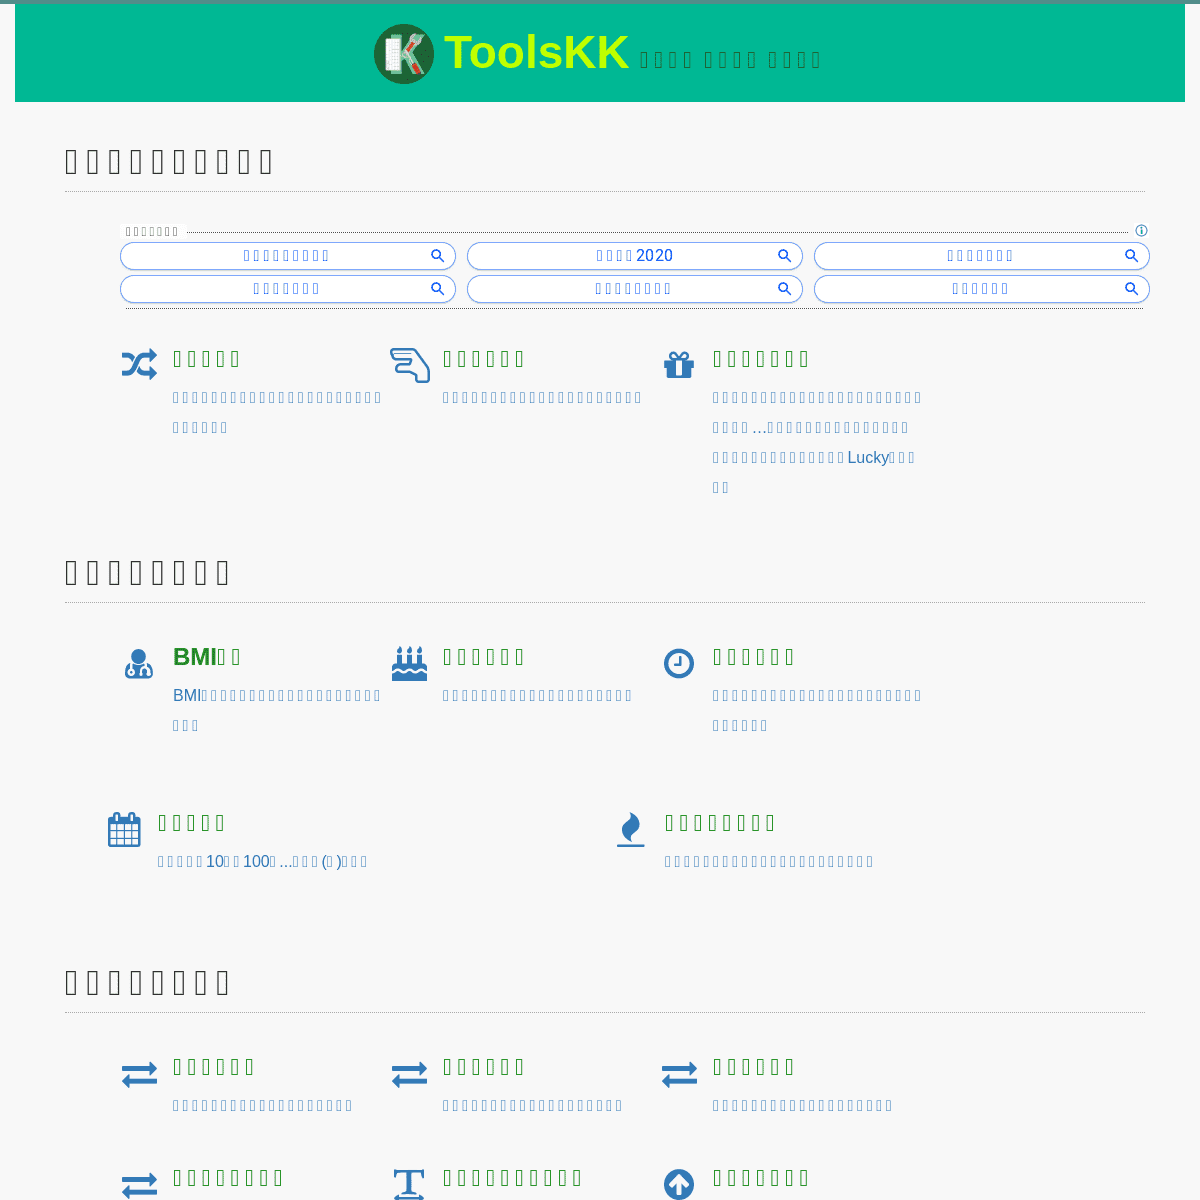 A complete backup of toolskk.com